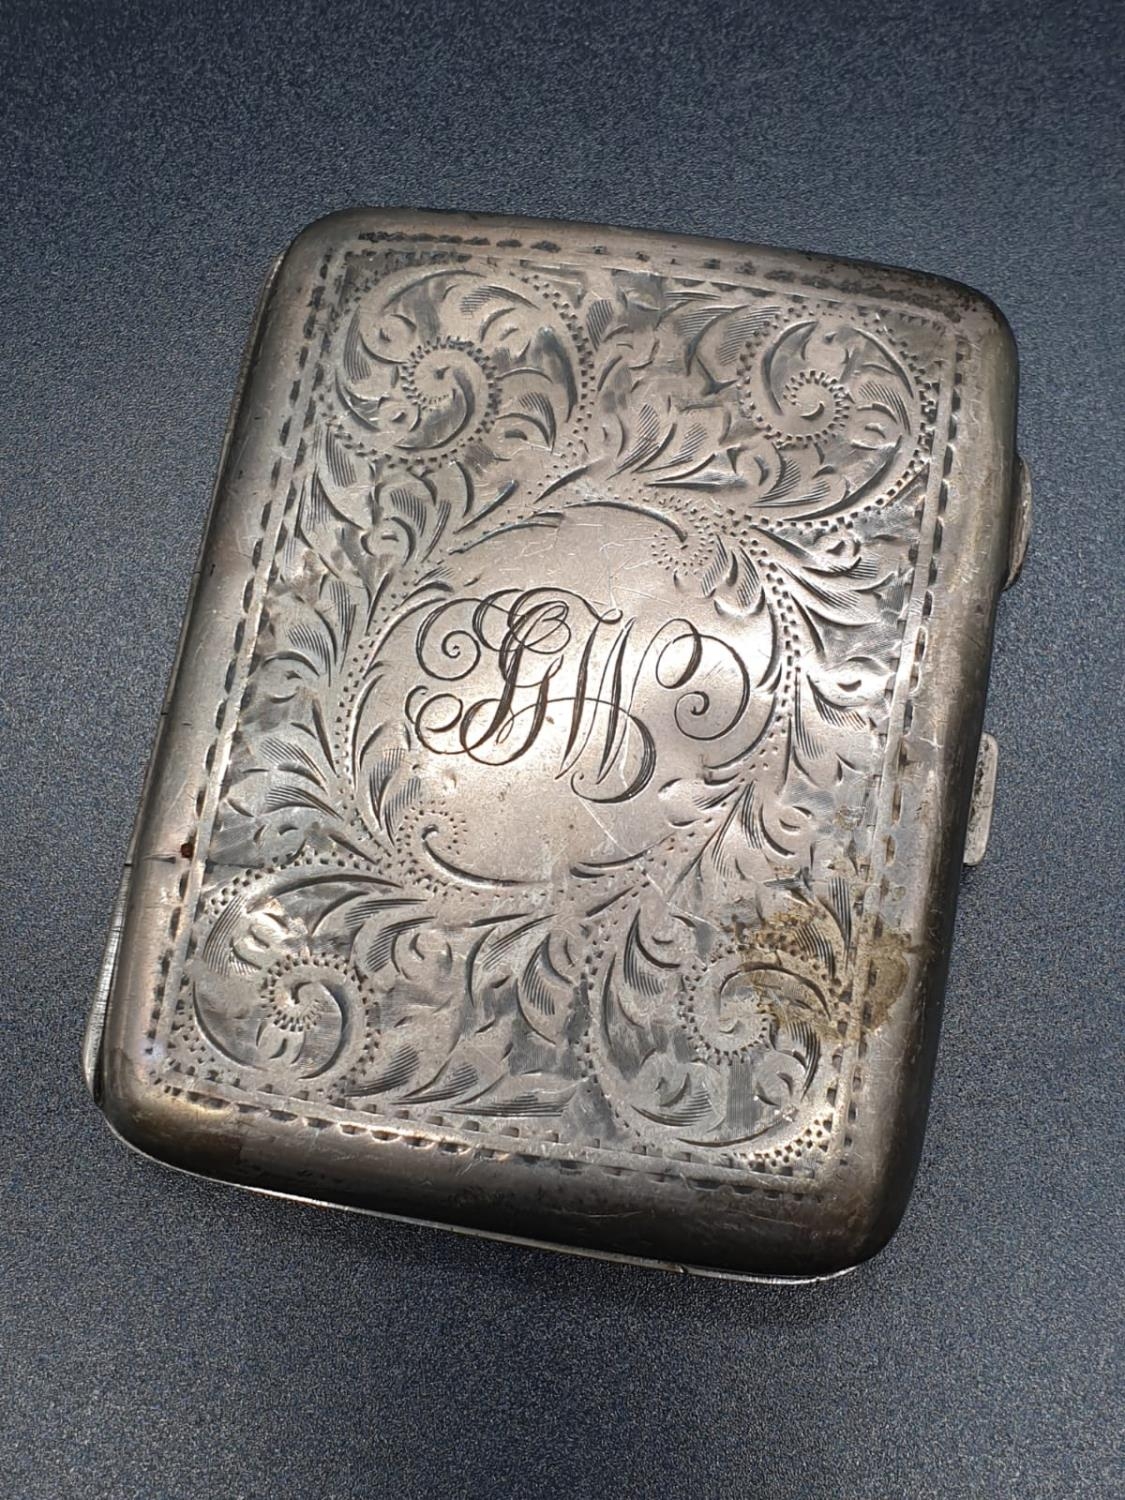 A Birmingham 1919 Hallmarked Silver Cigarette Case. Engraved decoration. A few signs of wear. A/F.